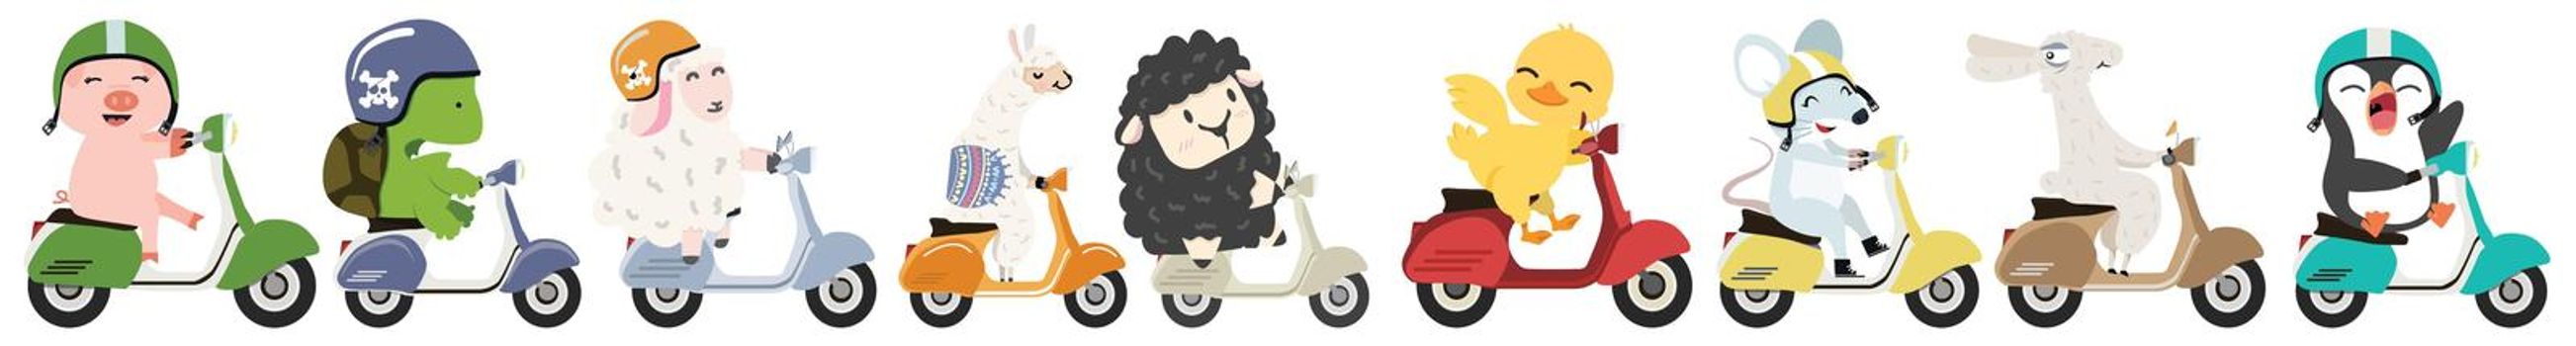 animals riding with scooter  set cartoon